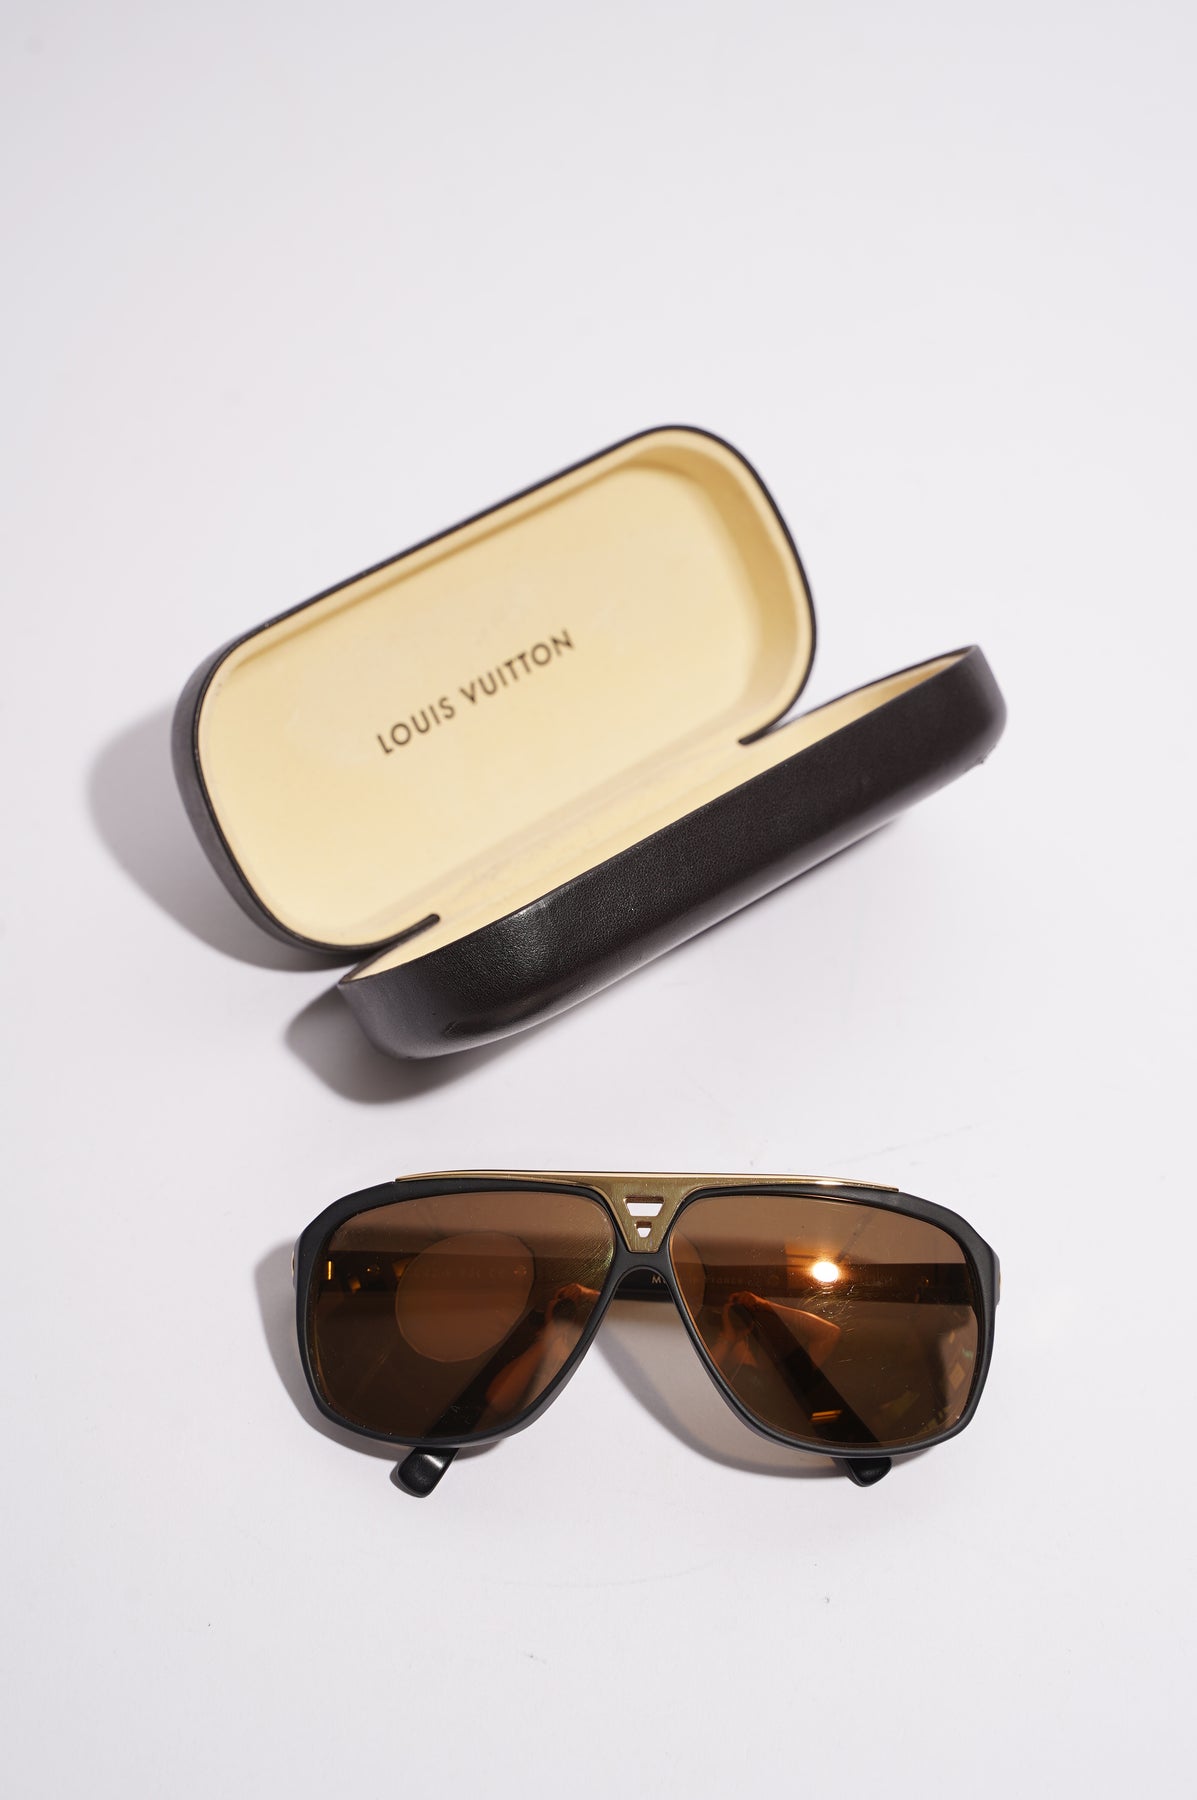 Louis Vuitton Monogram Engraved Evidence Sunglasses black gold